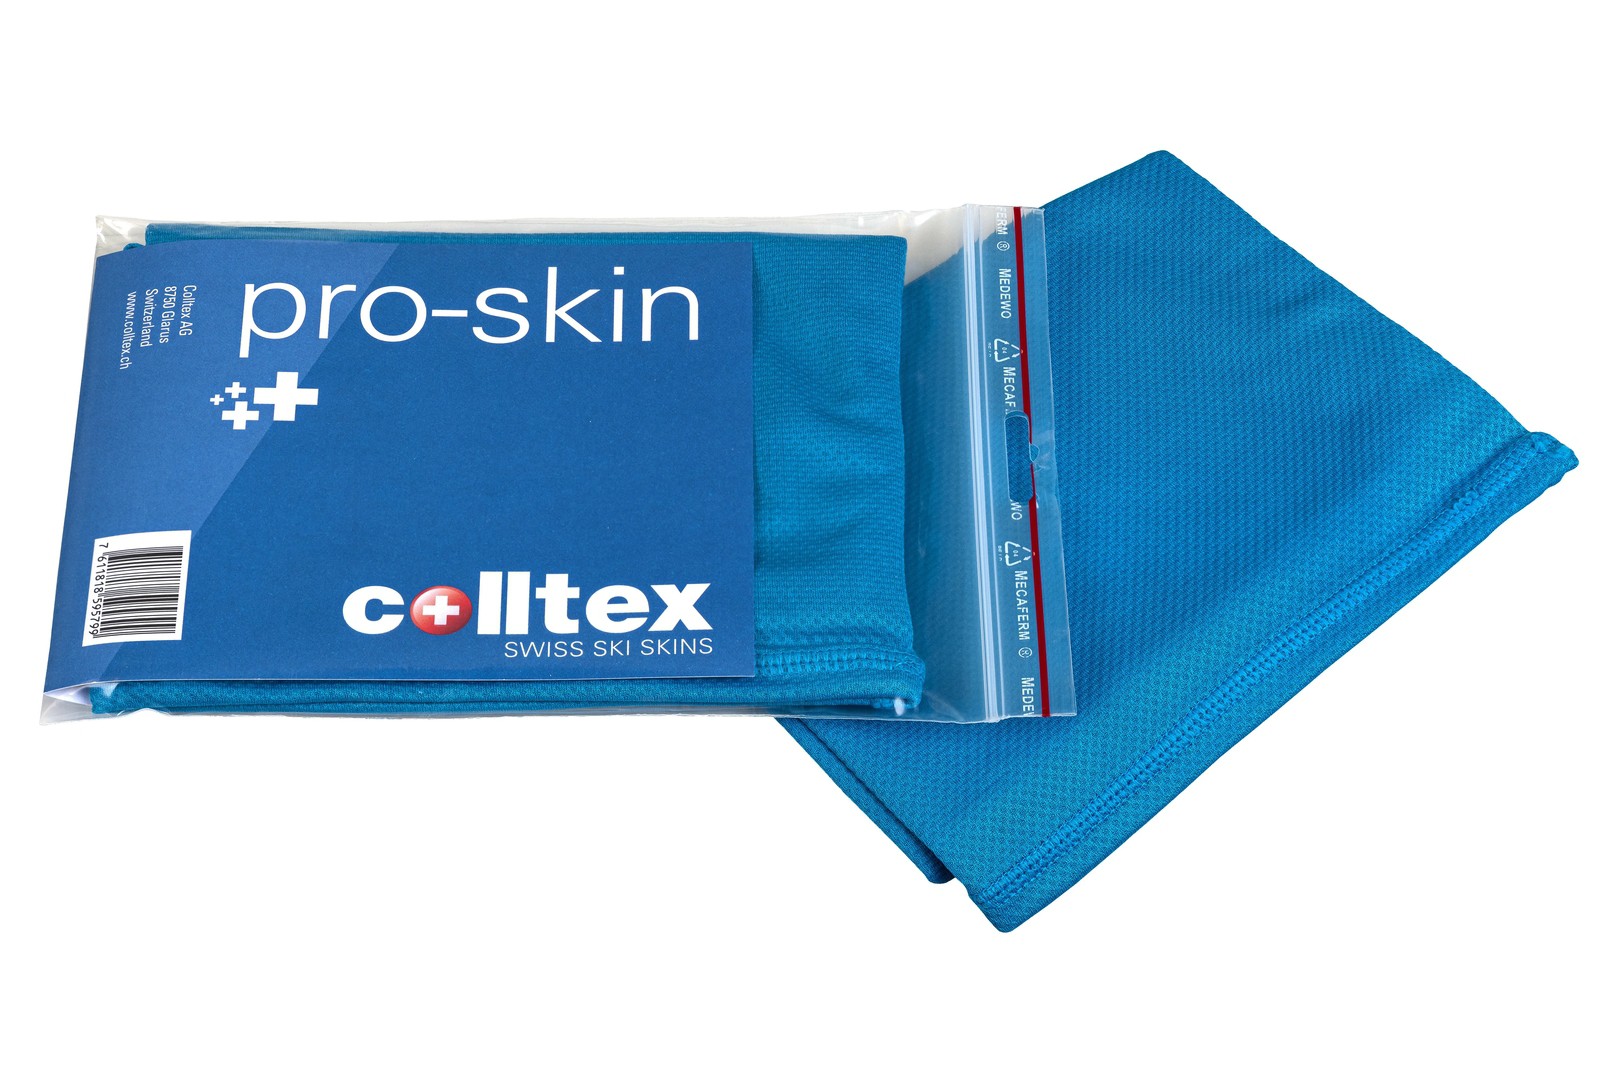 Pro-Skin CollTex